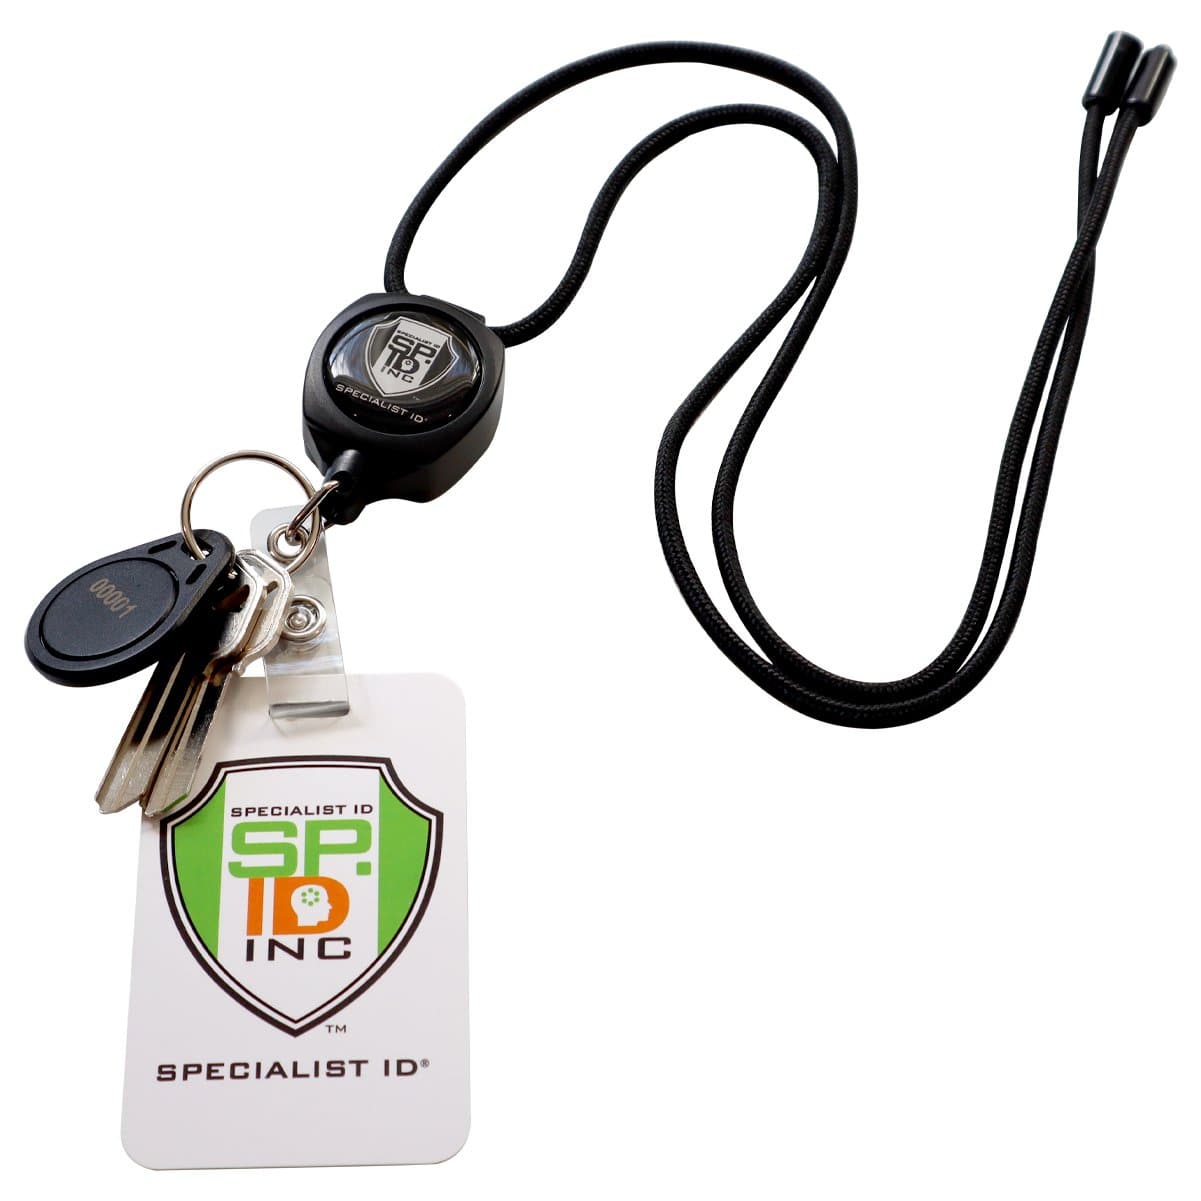 2 Heavy Duty SIDEKICK Badge Reels Retractable I'd Holder Key Chain